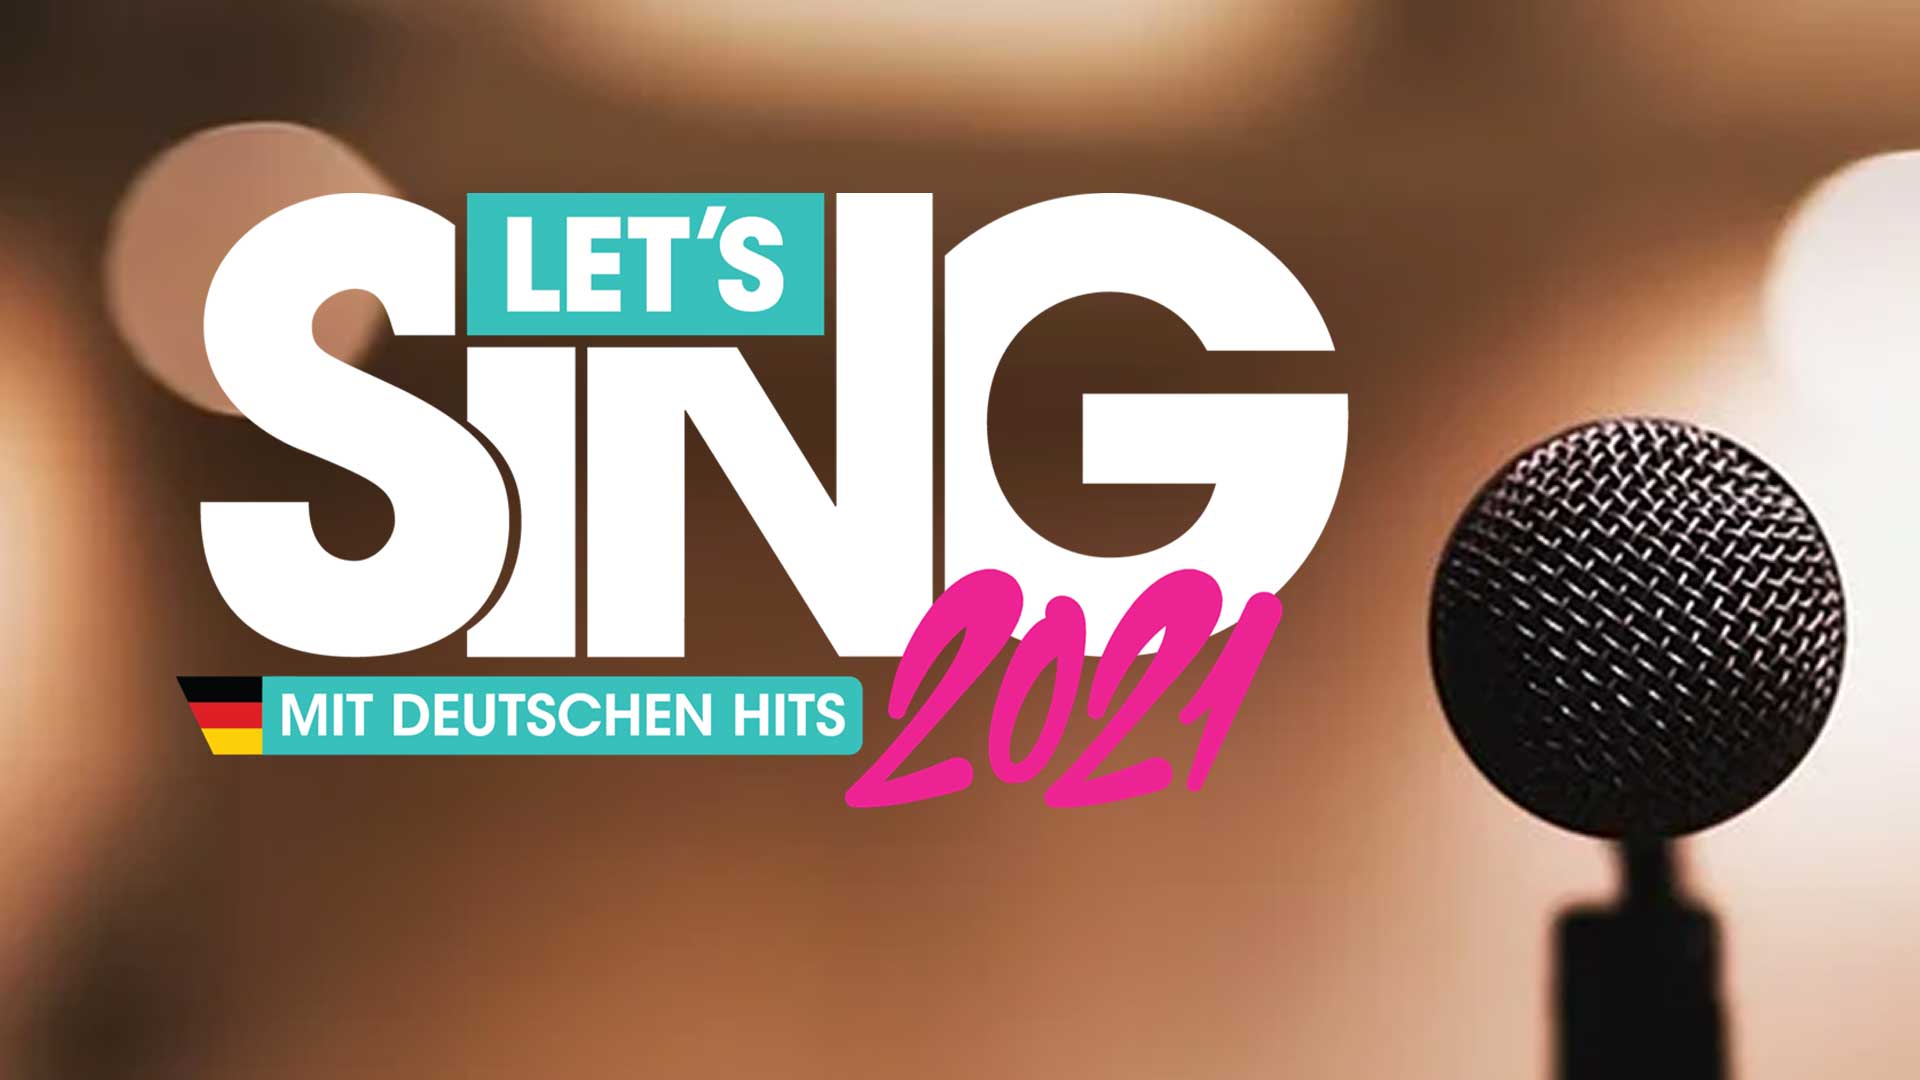 Deutsche Hits in Let's Sing 2021: Forster, Lena, Giesinger ...